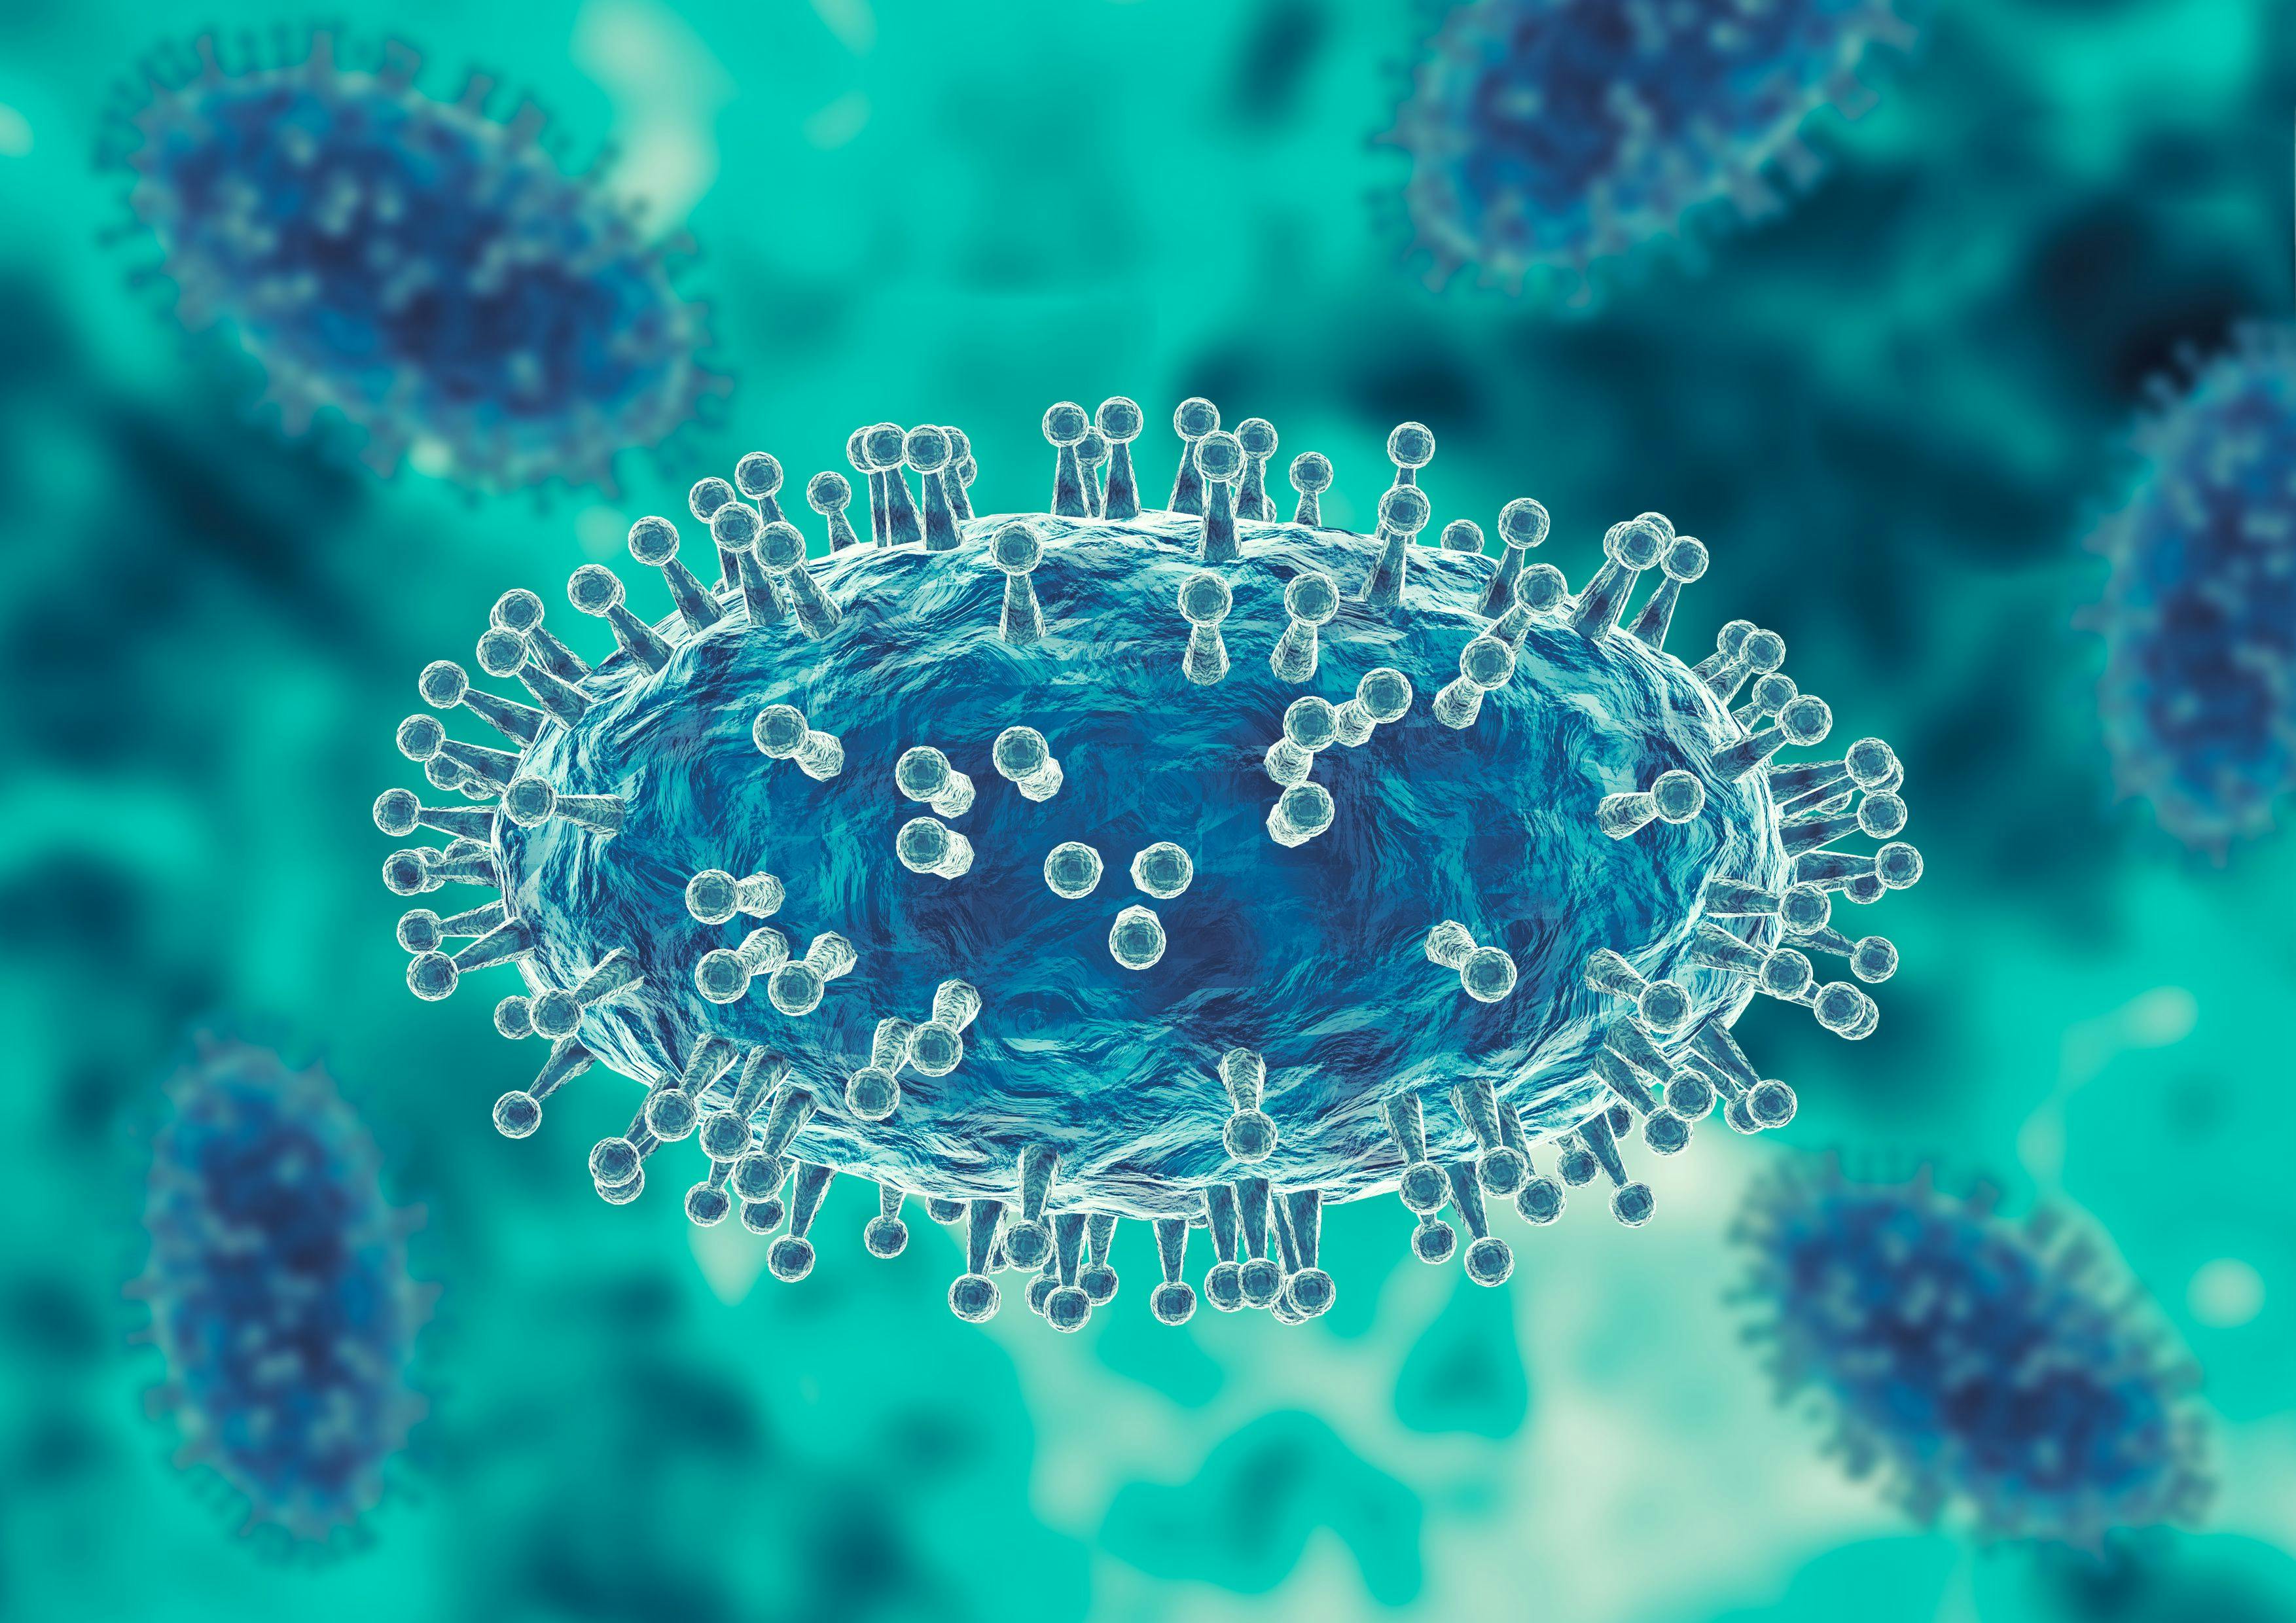 Monkeypox virus (mpox) | Image Credit: AGPhotography - stock.adobe.com